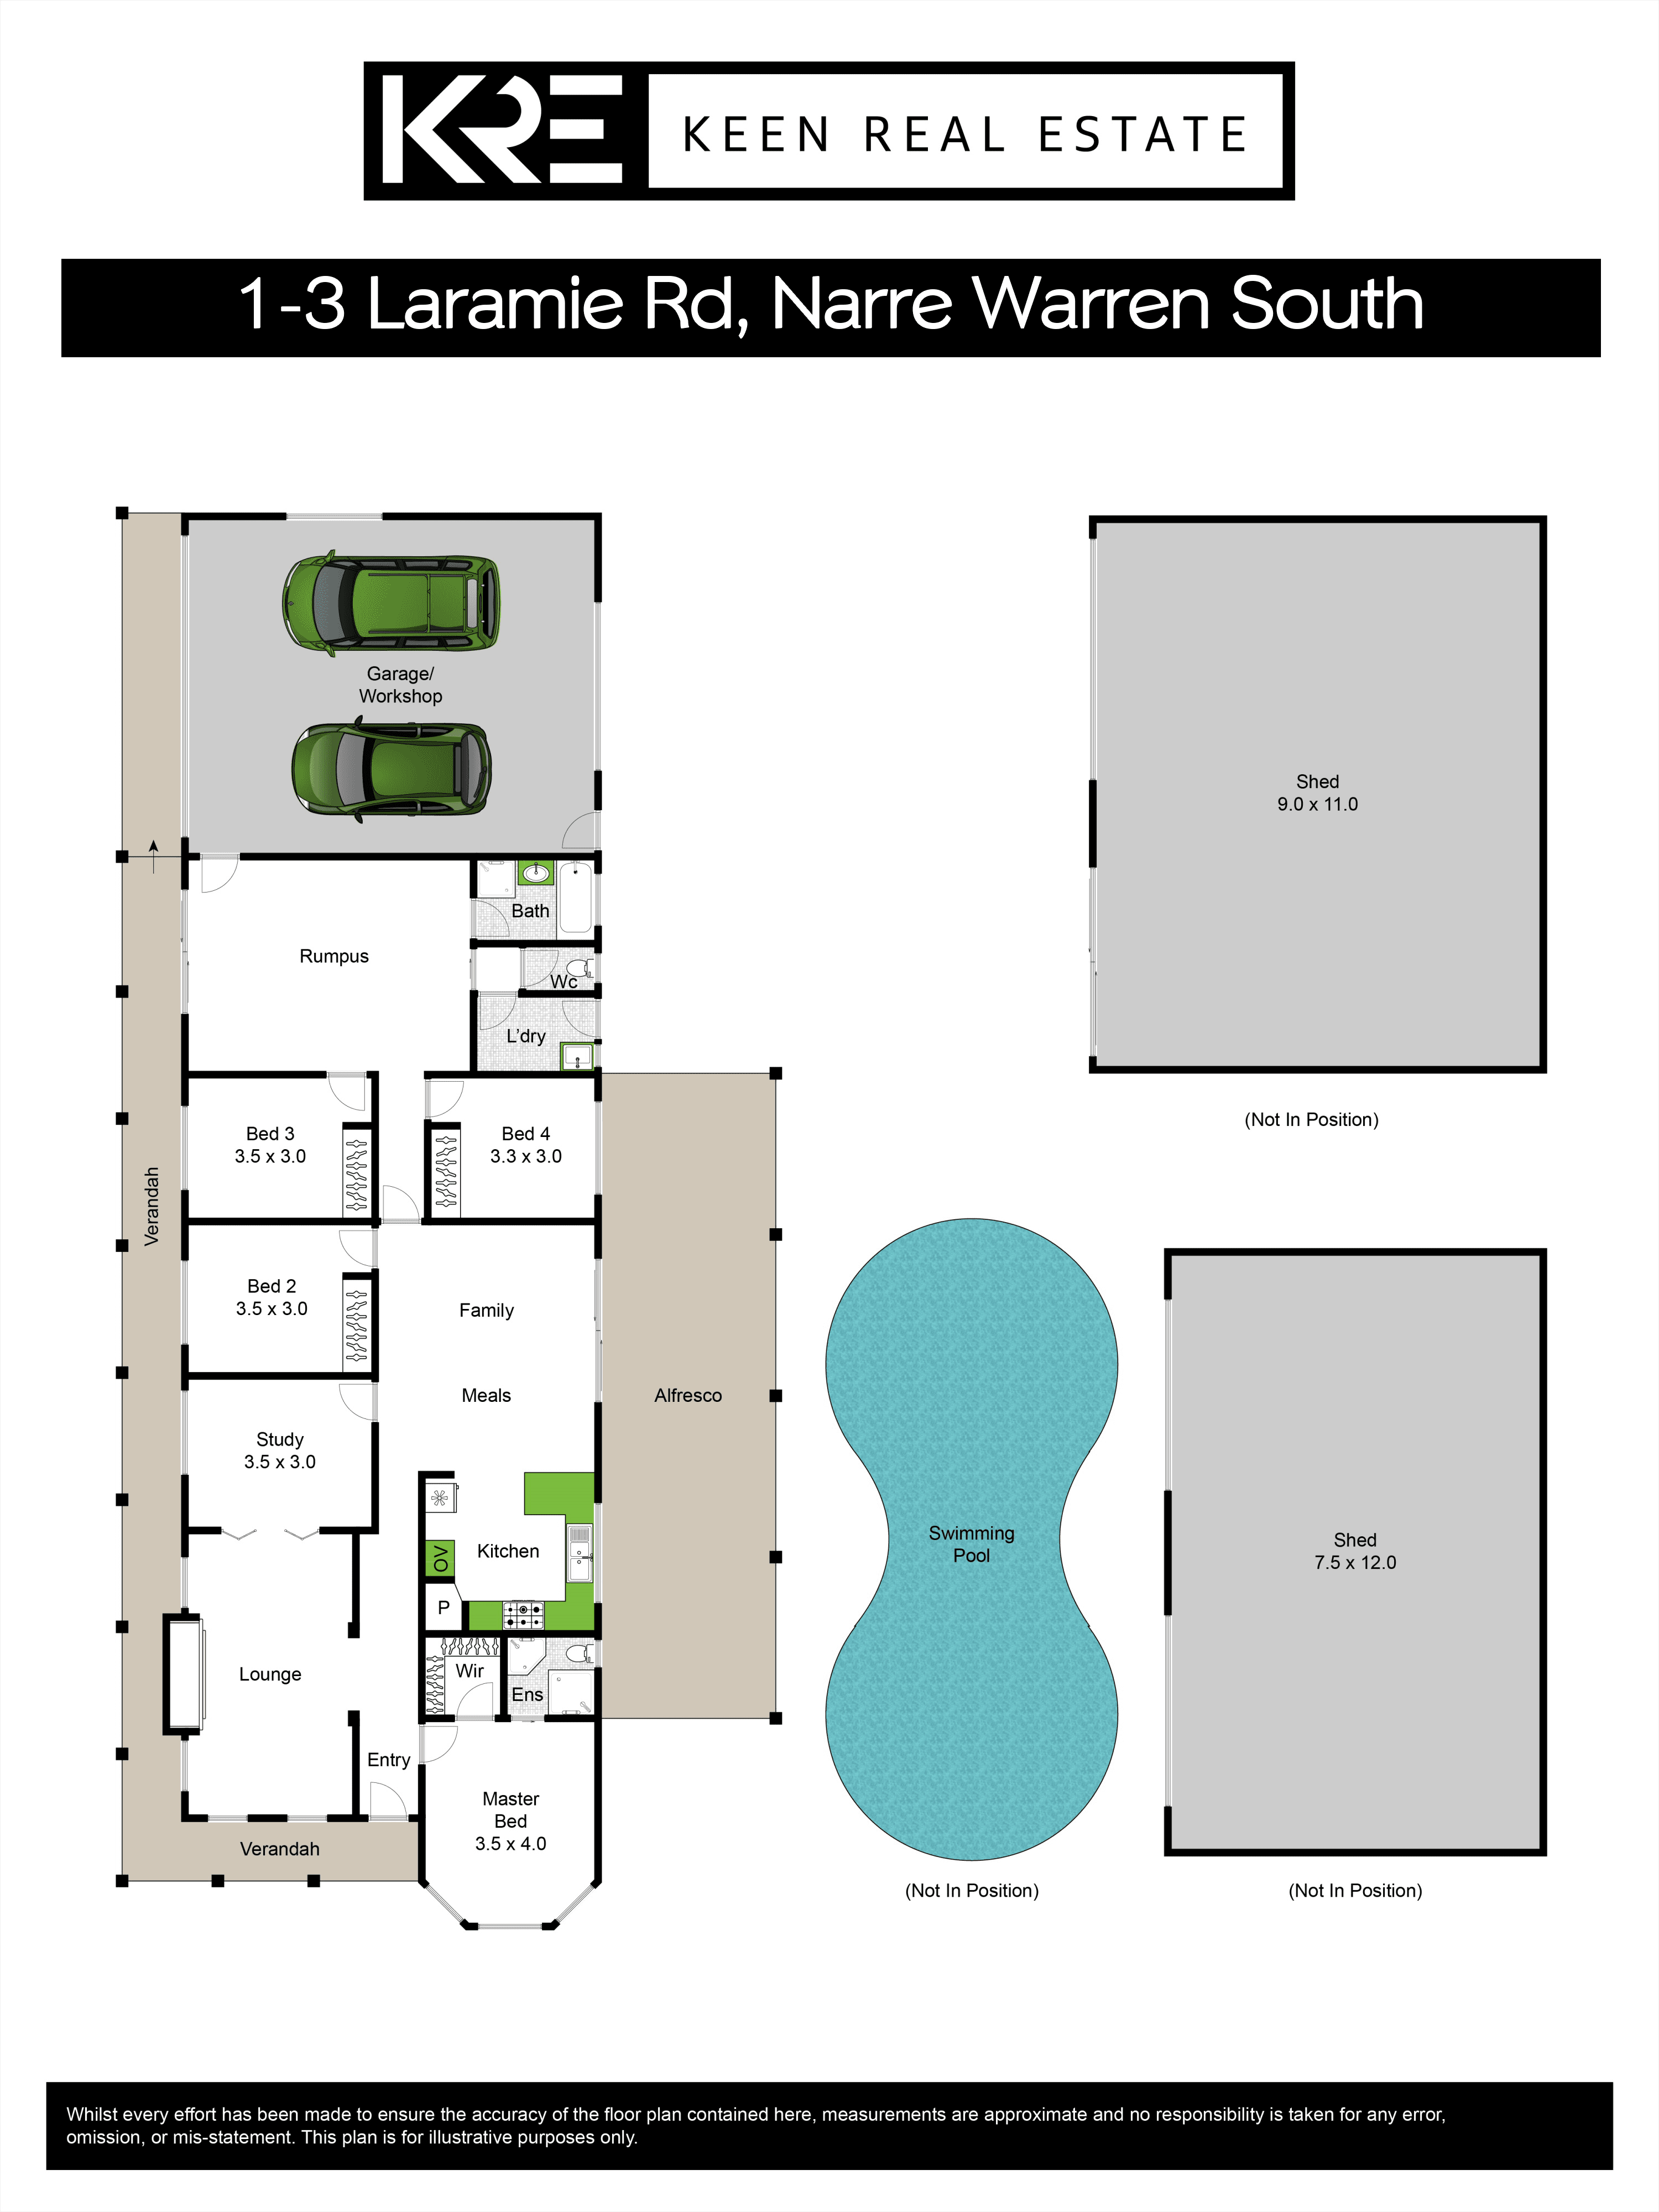 1-3 Laramie Road, NARRE WARREN SOUTH, VIC 3805